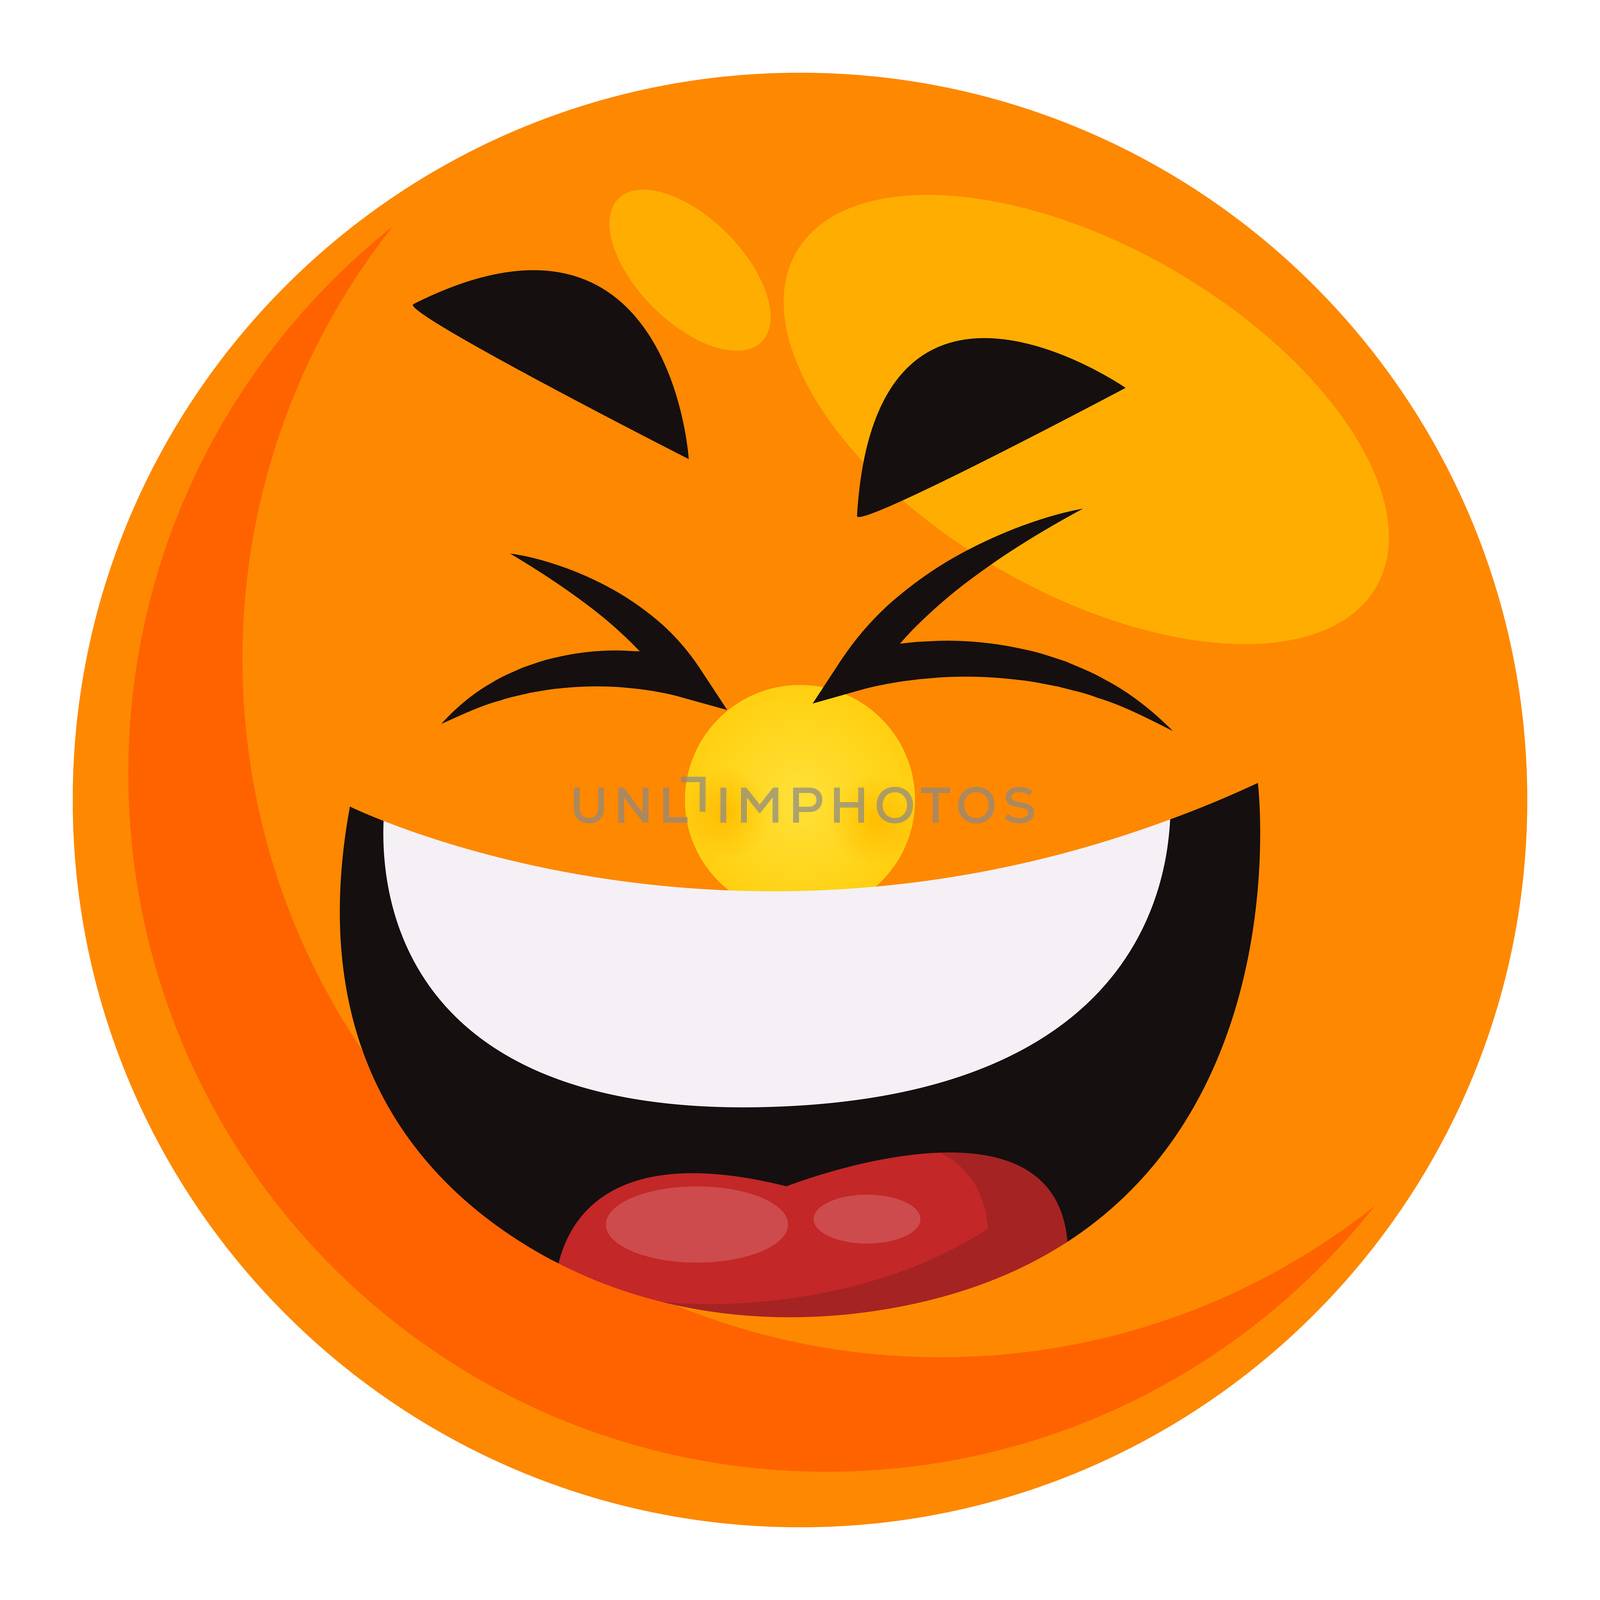 LOL emoji, illustration, vector on white background by Morphart